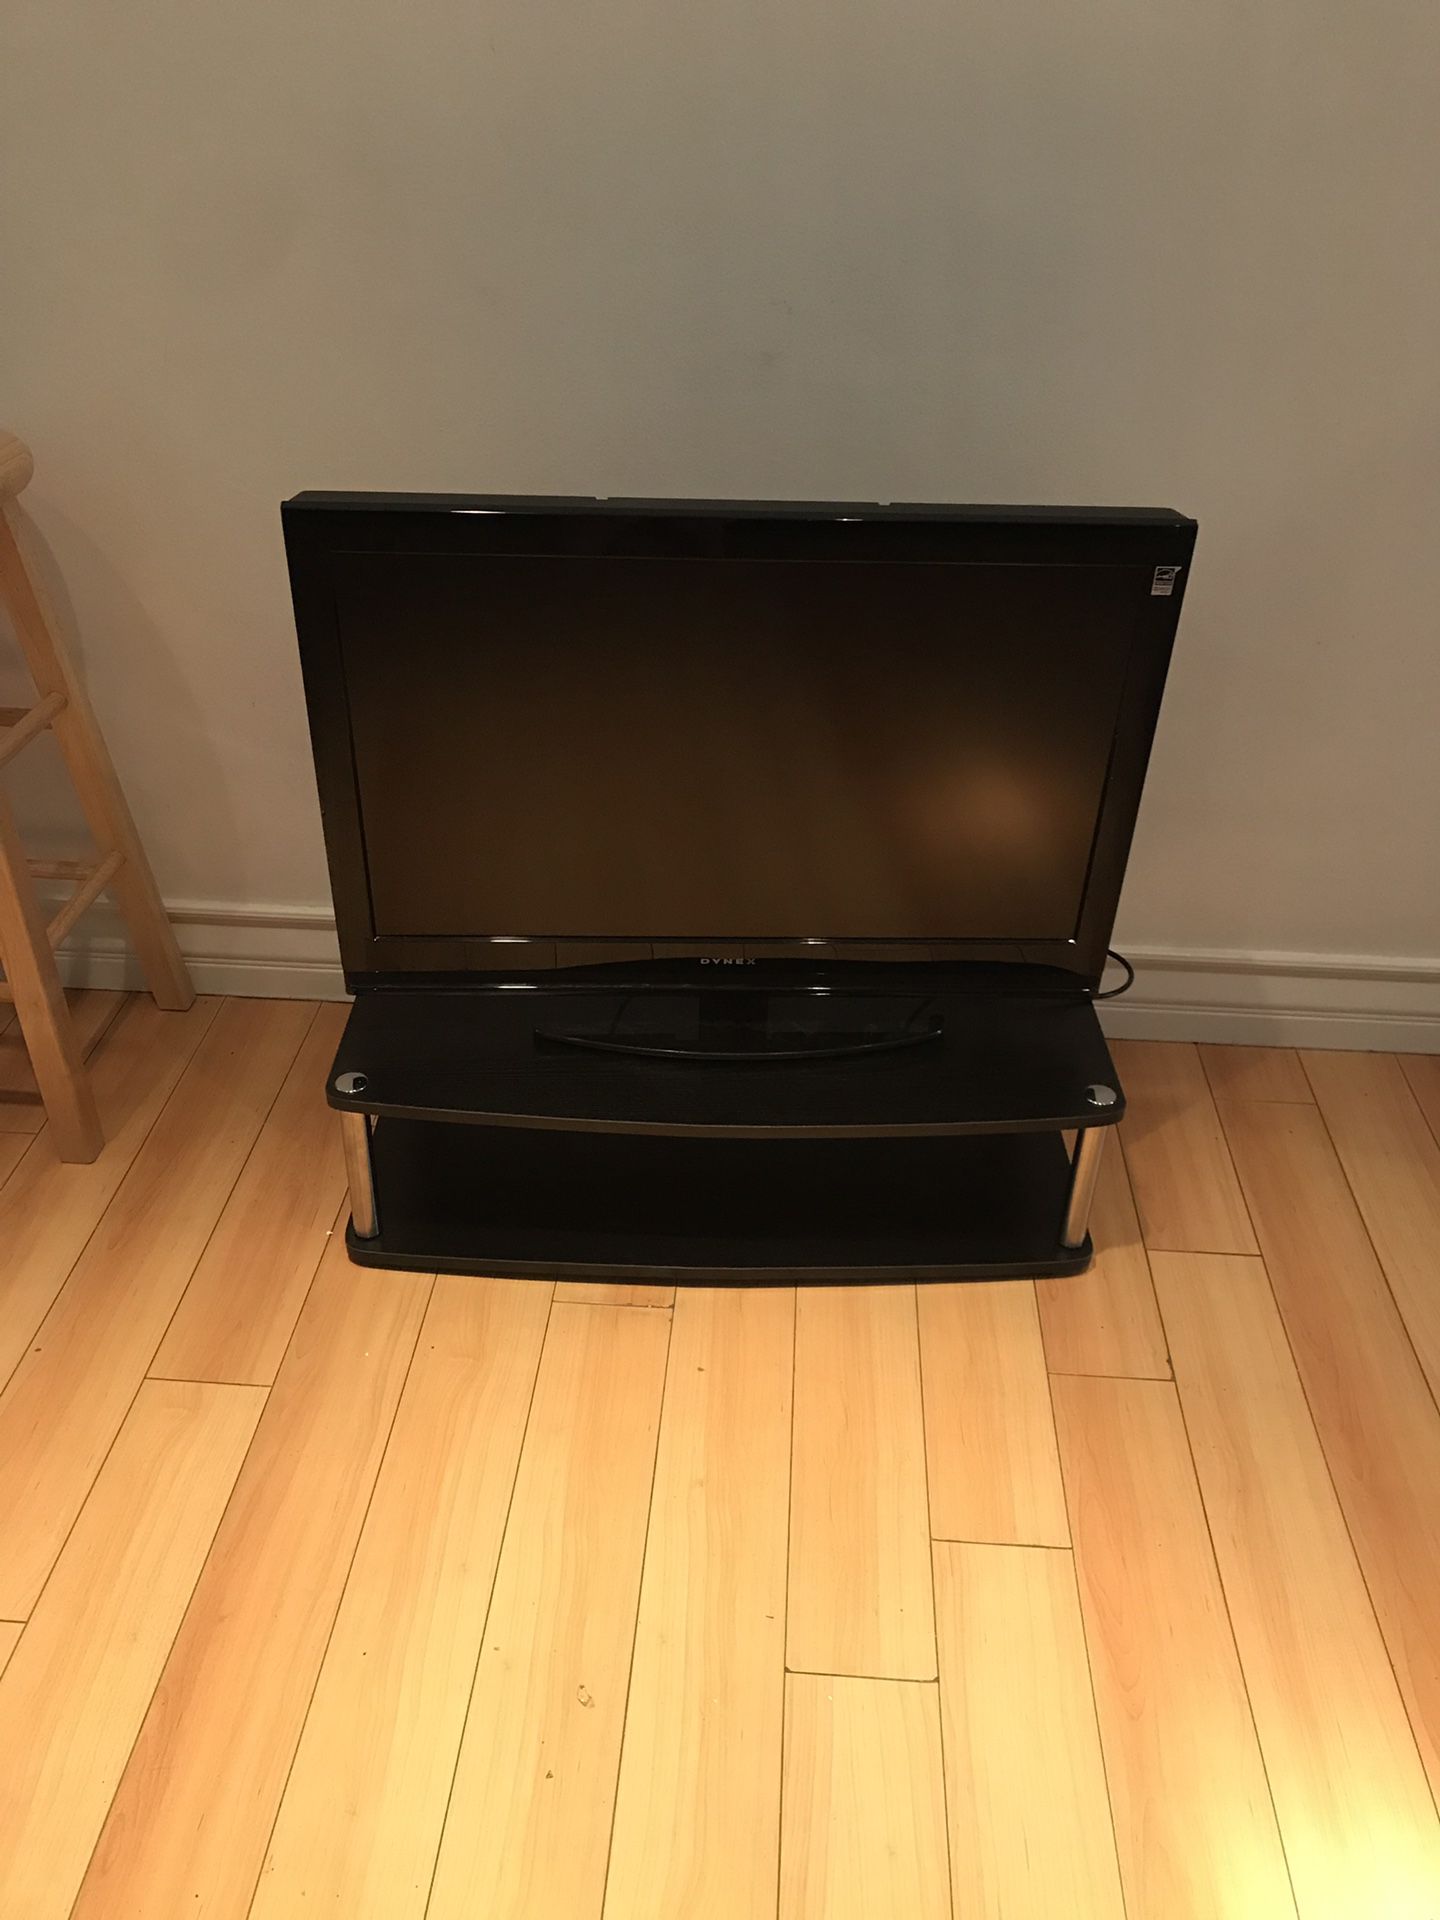 Dynex TV monitor